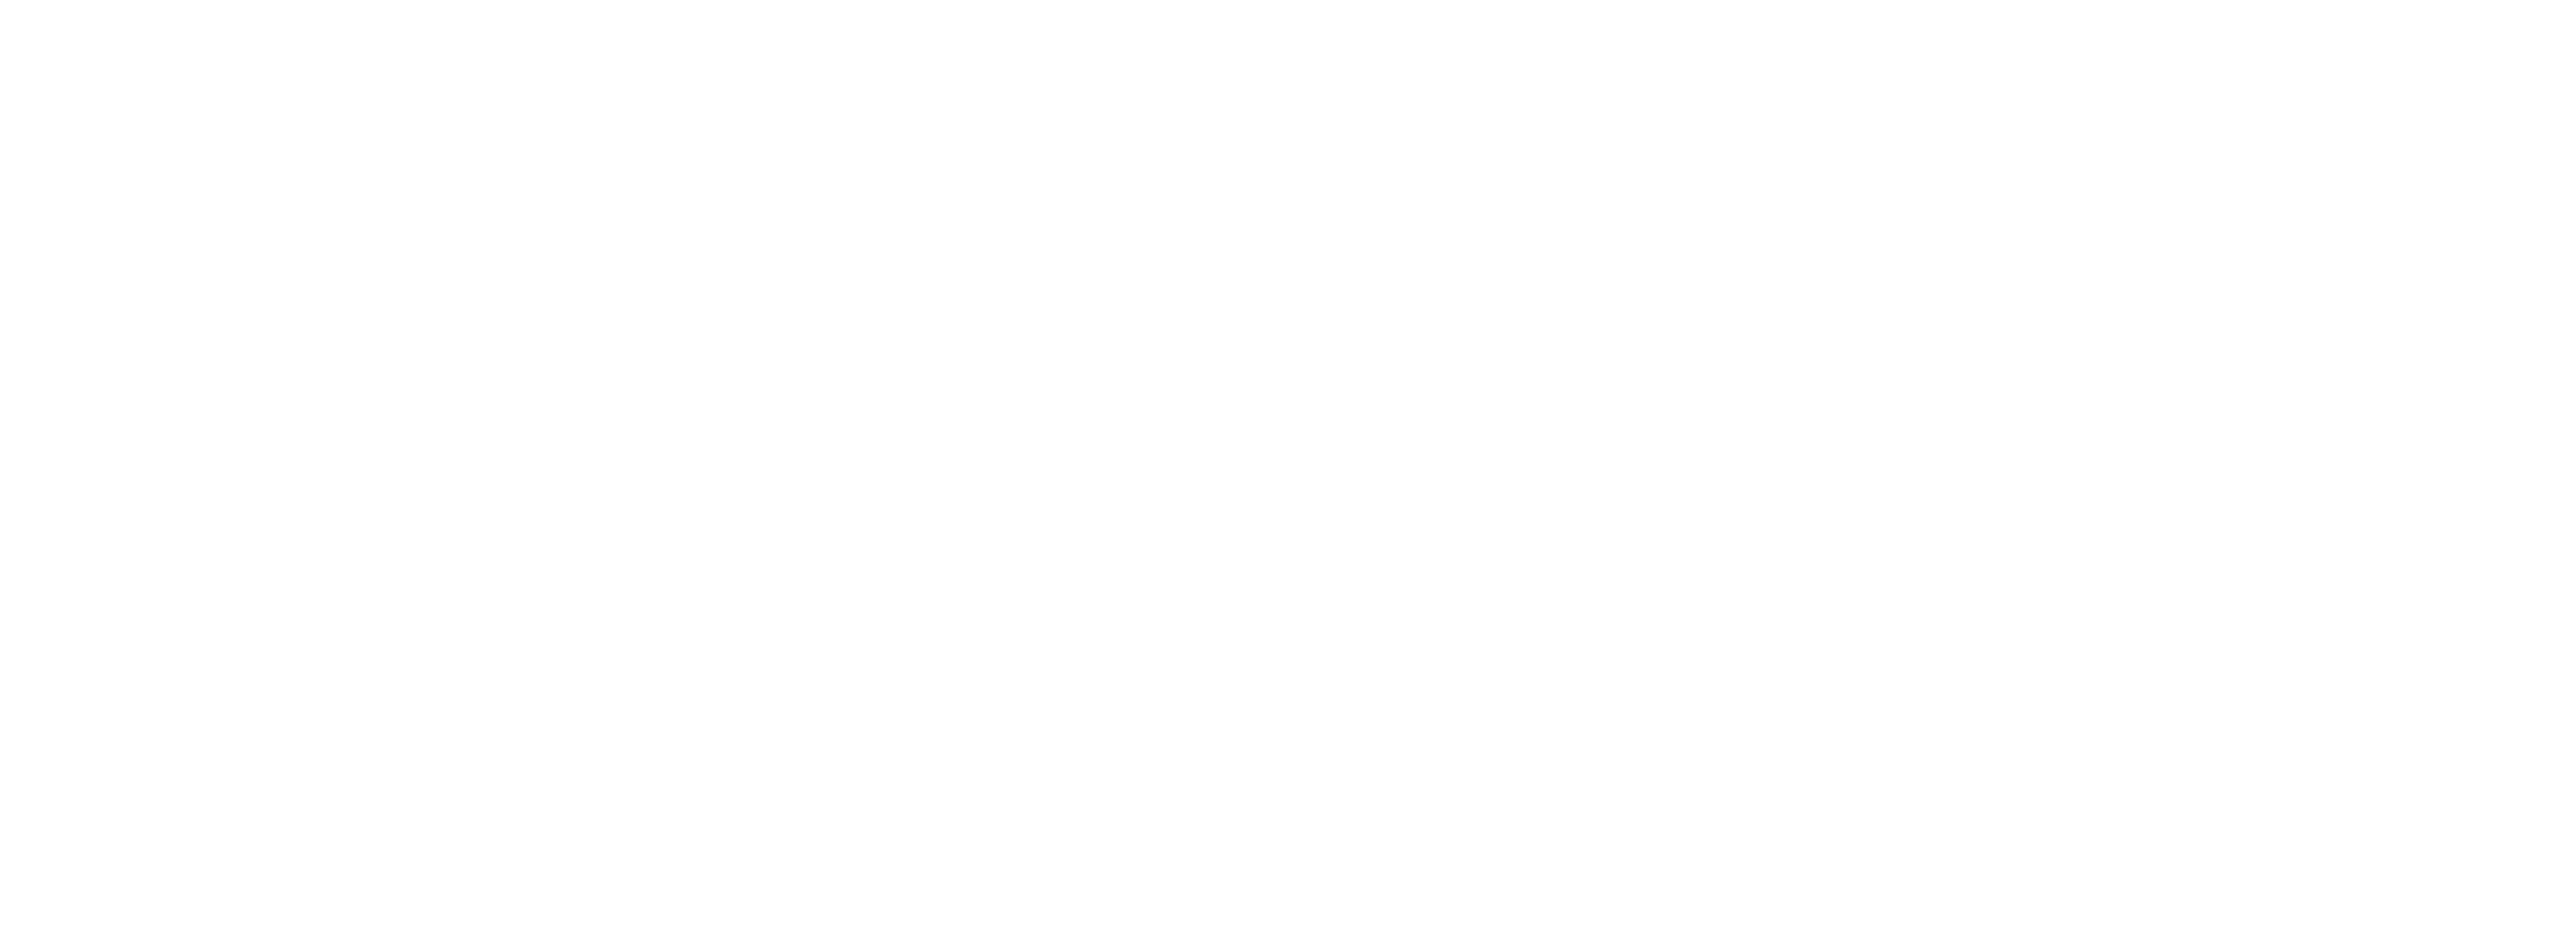 HKSPDA Logo